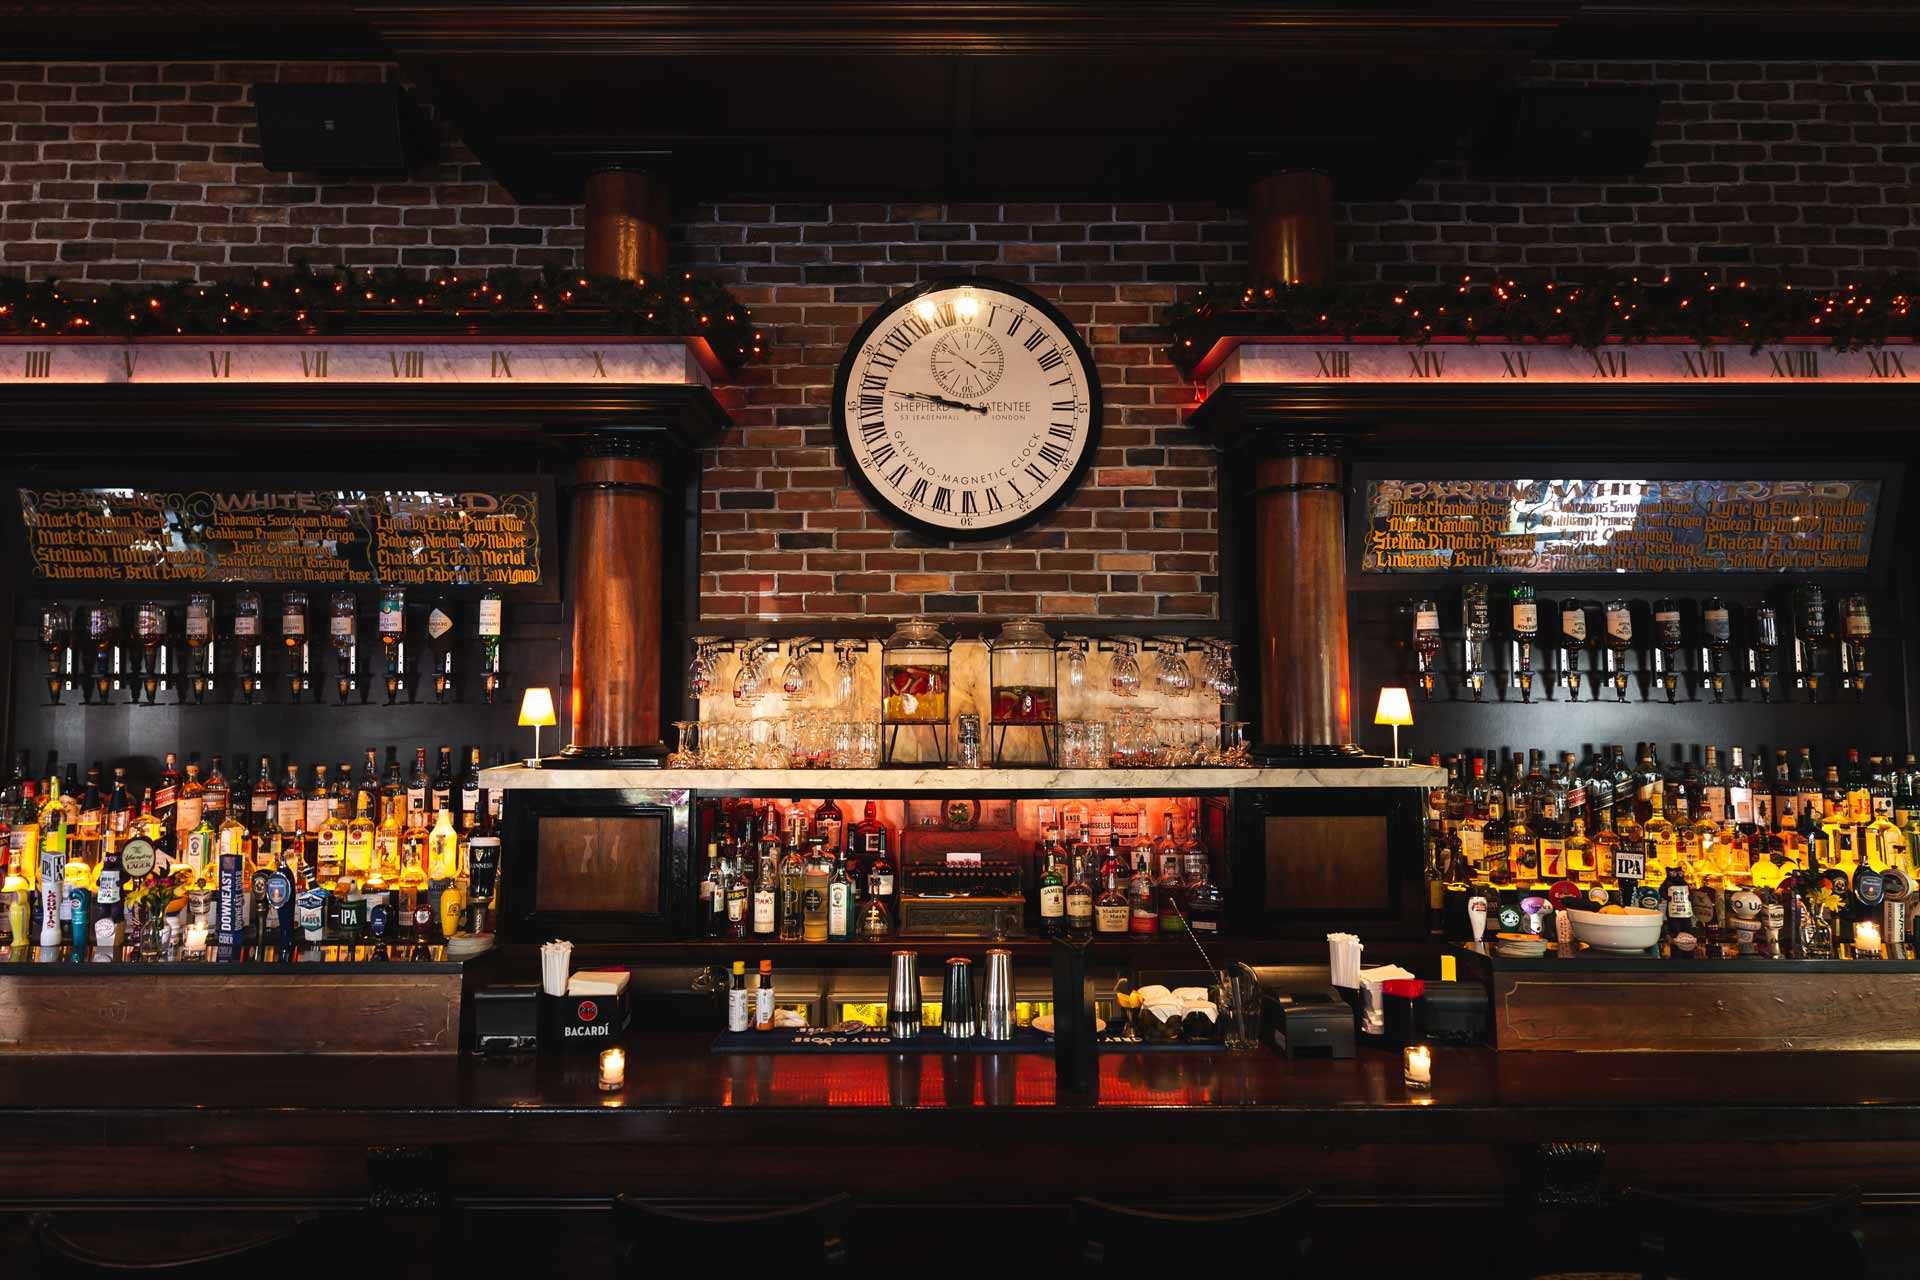 Interior, bar area